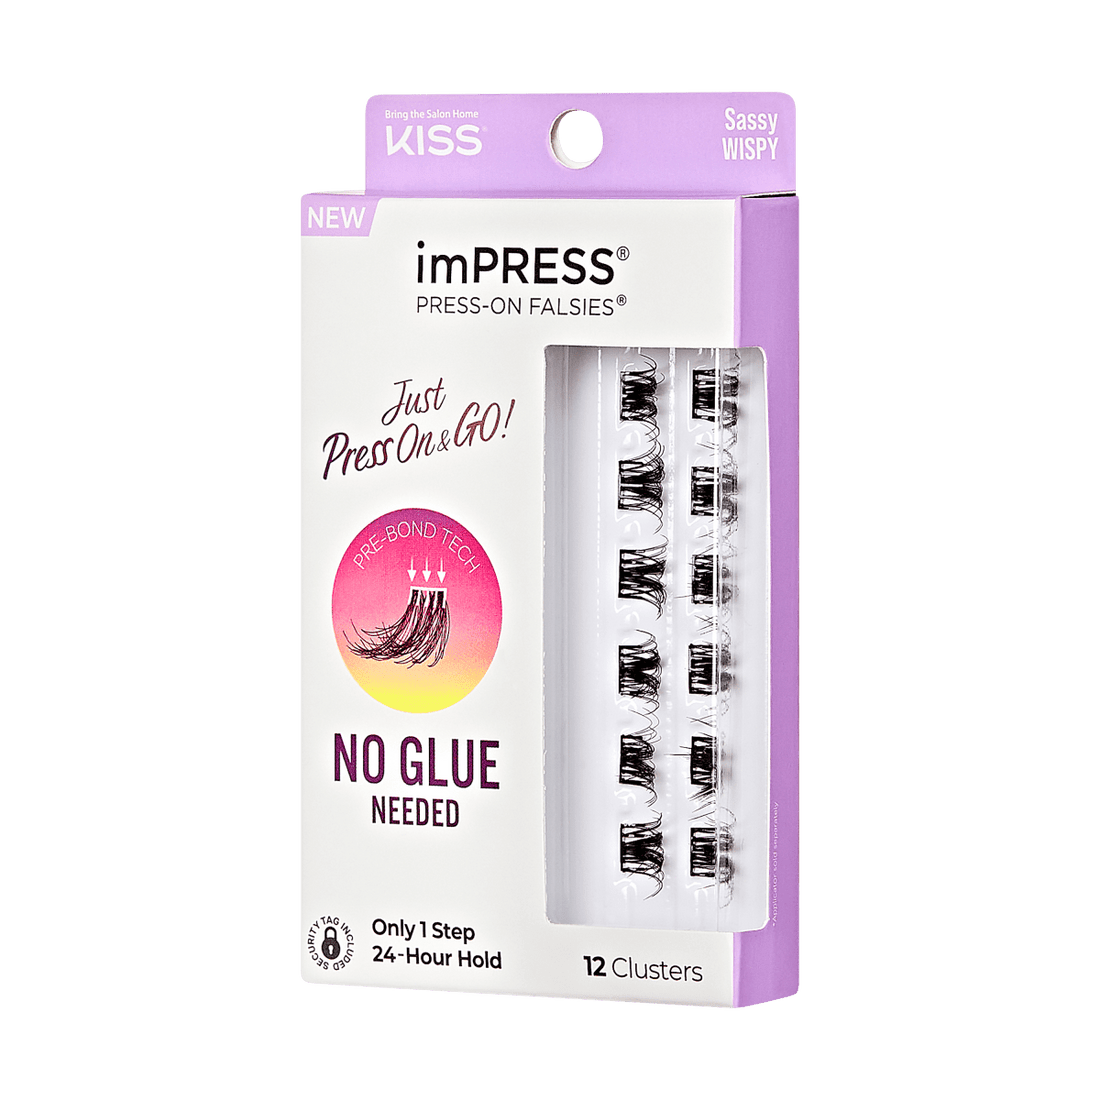 imPRESS Press-On Falsies Minipack 12 Clusters - Sassy